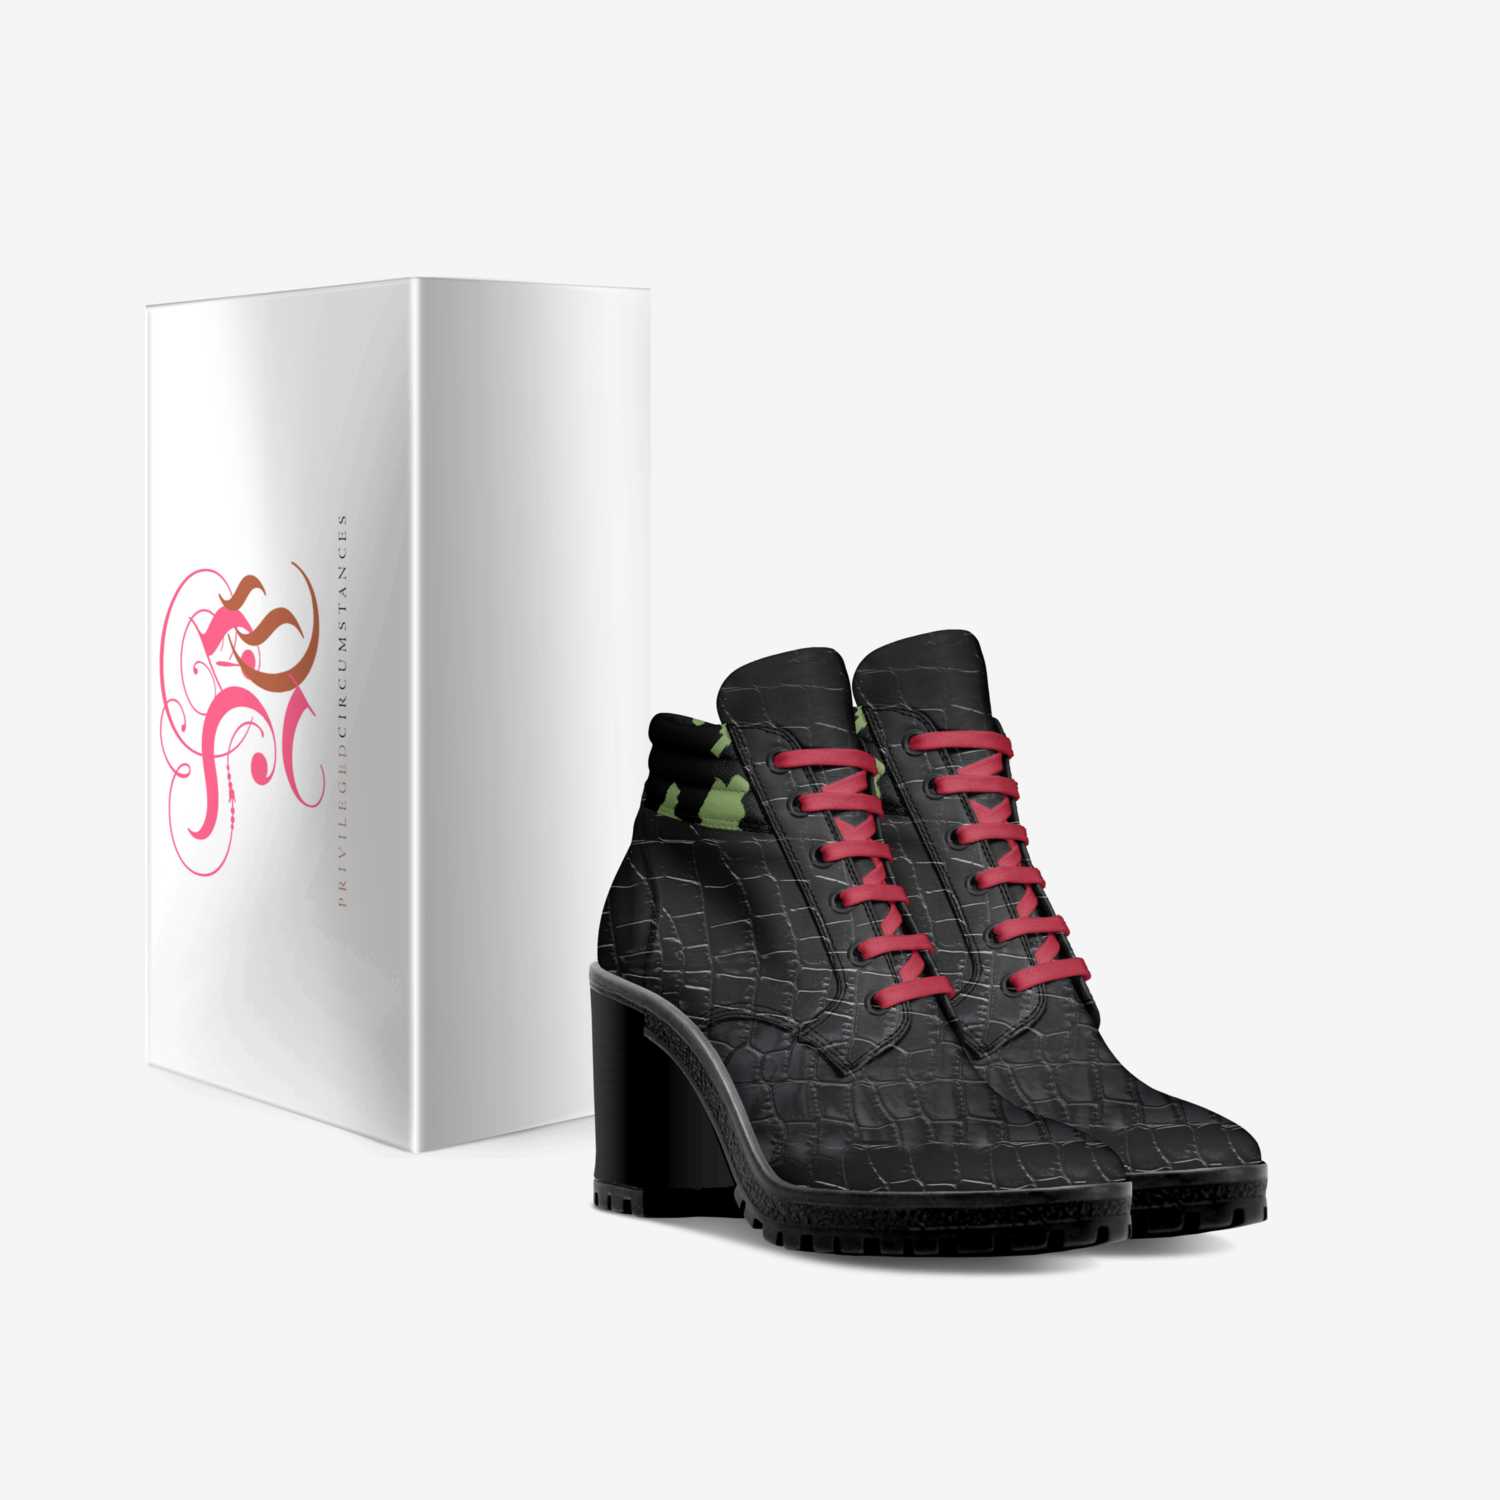 Reny custom made in Italy shoes by Tiffany Lake | Box view